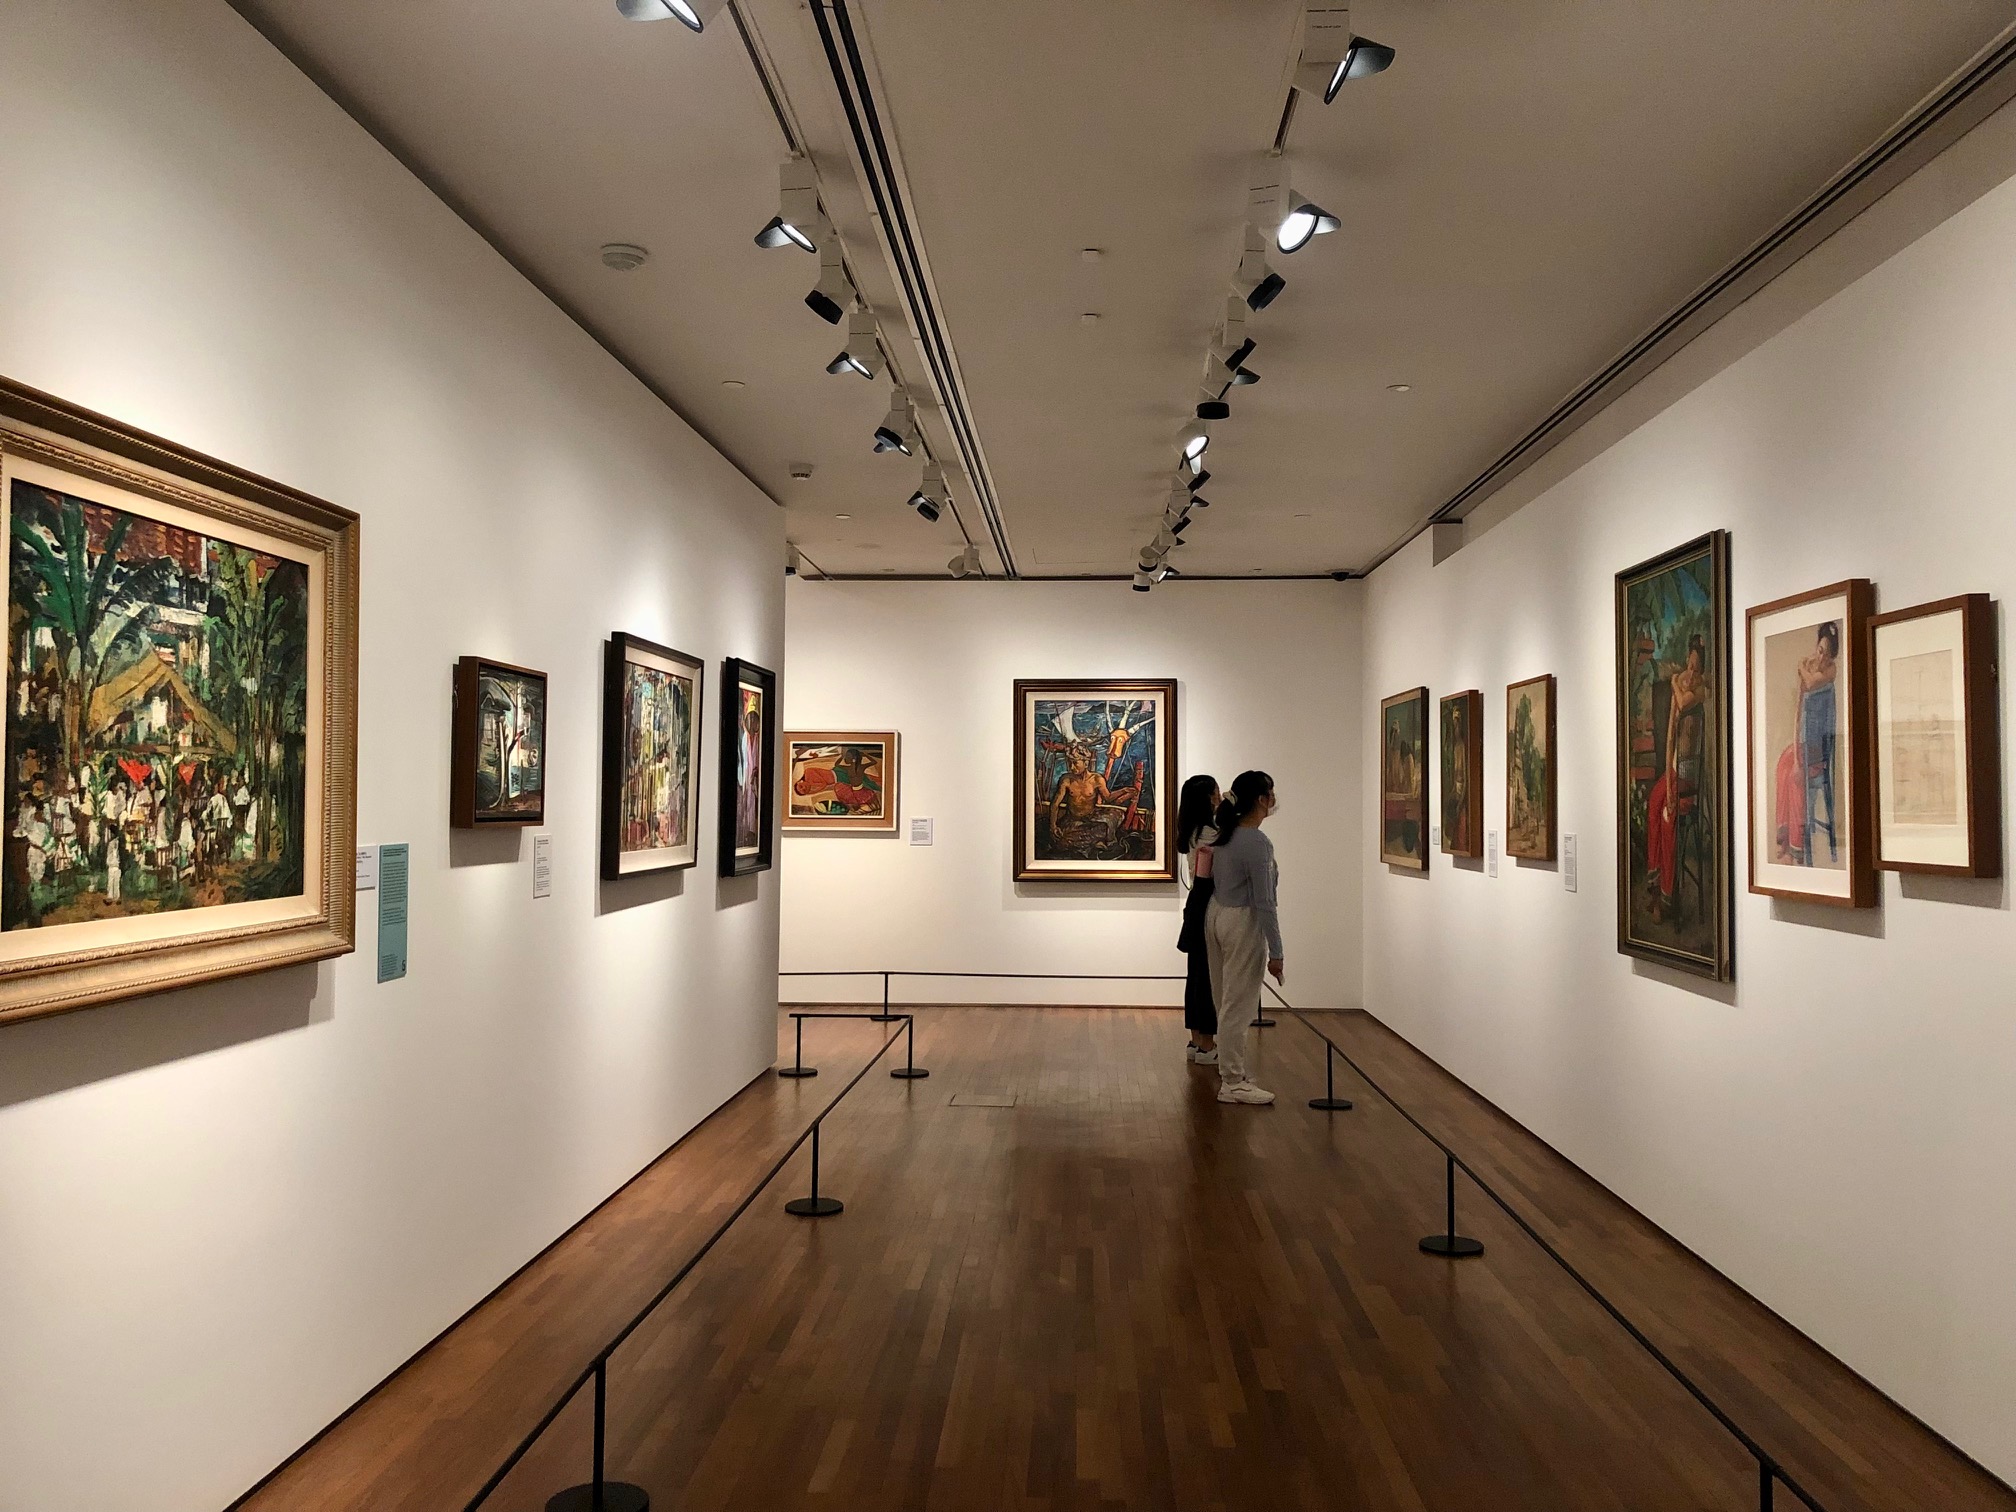 Siapa Nama Kamu: Exhibition Of Singapore Art History